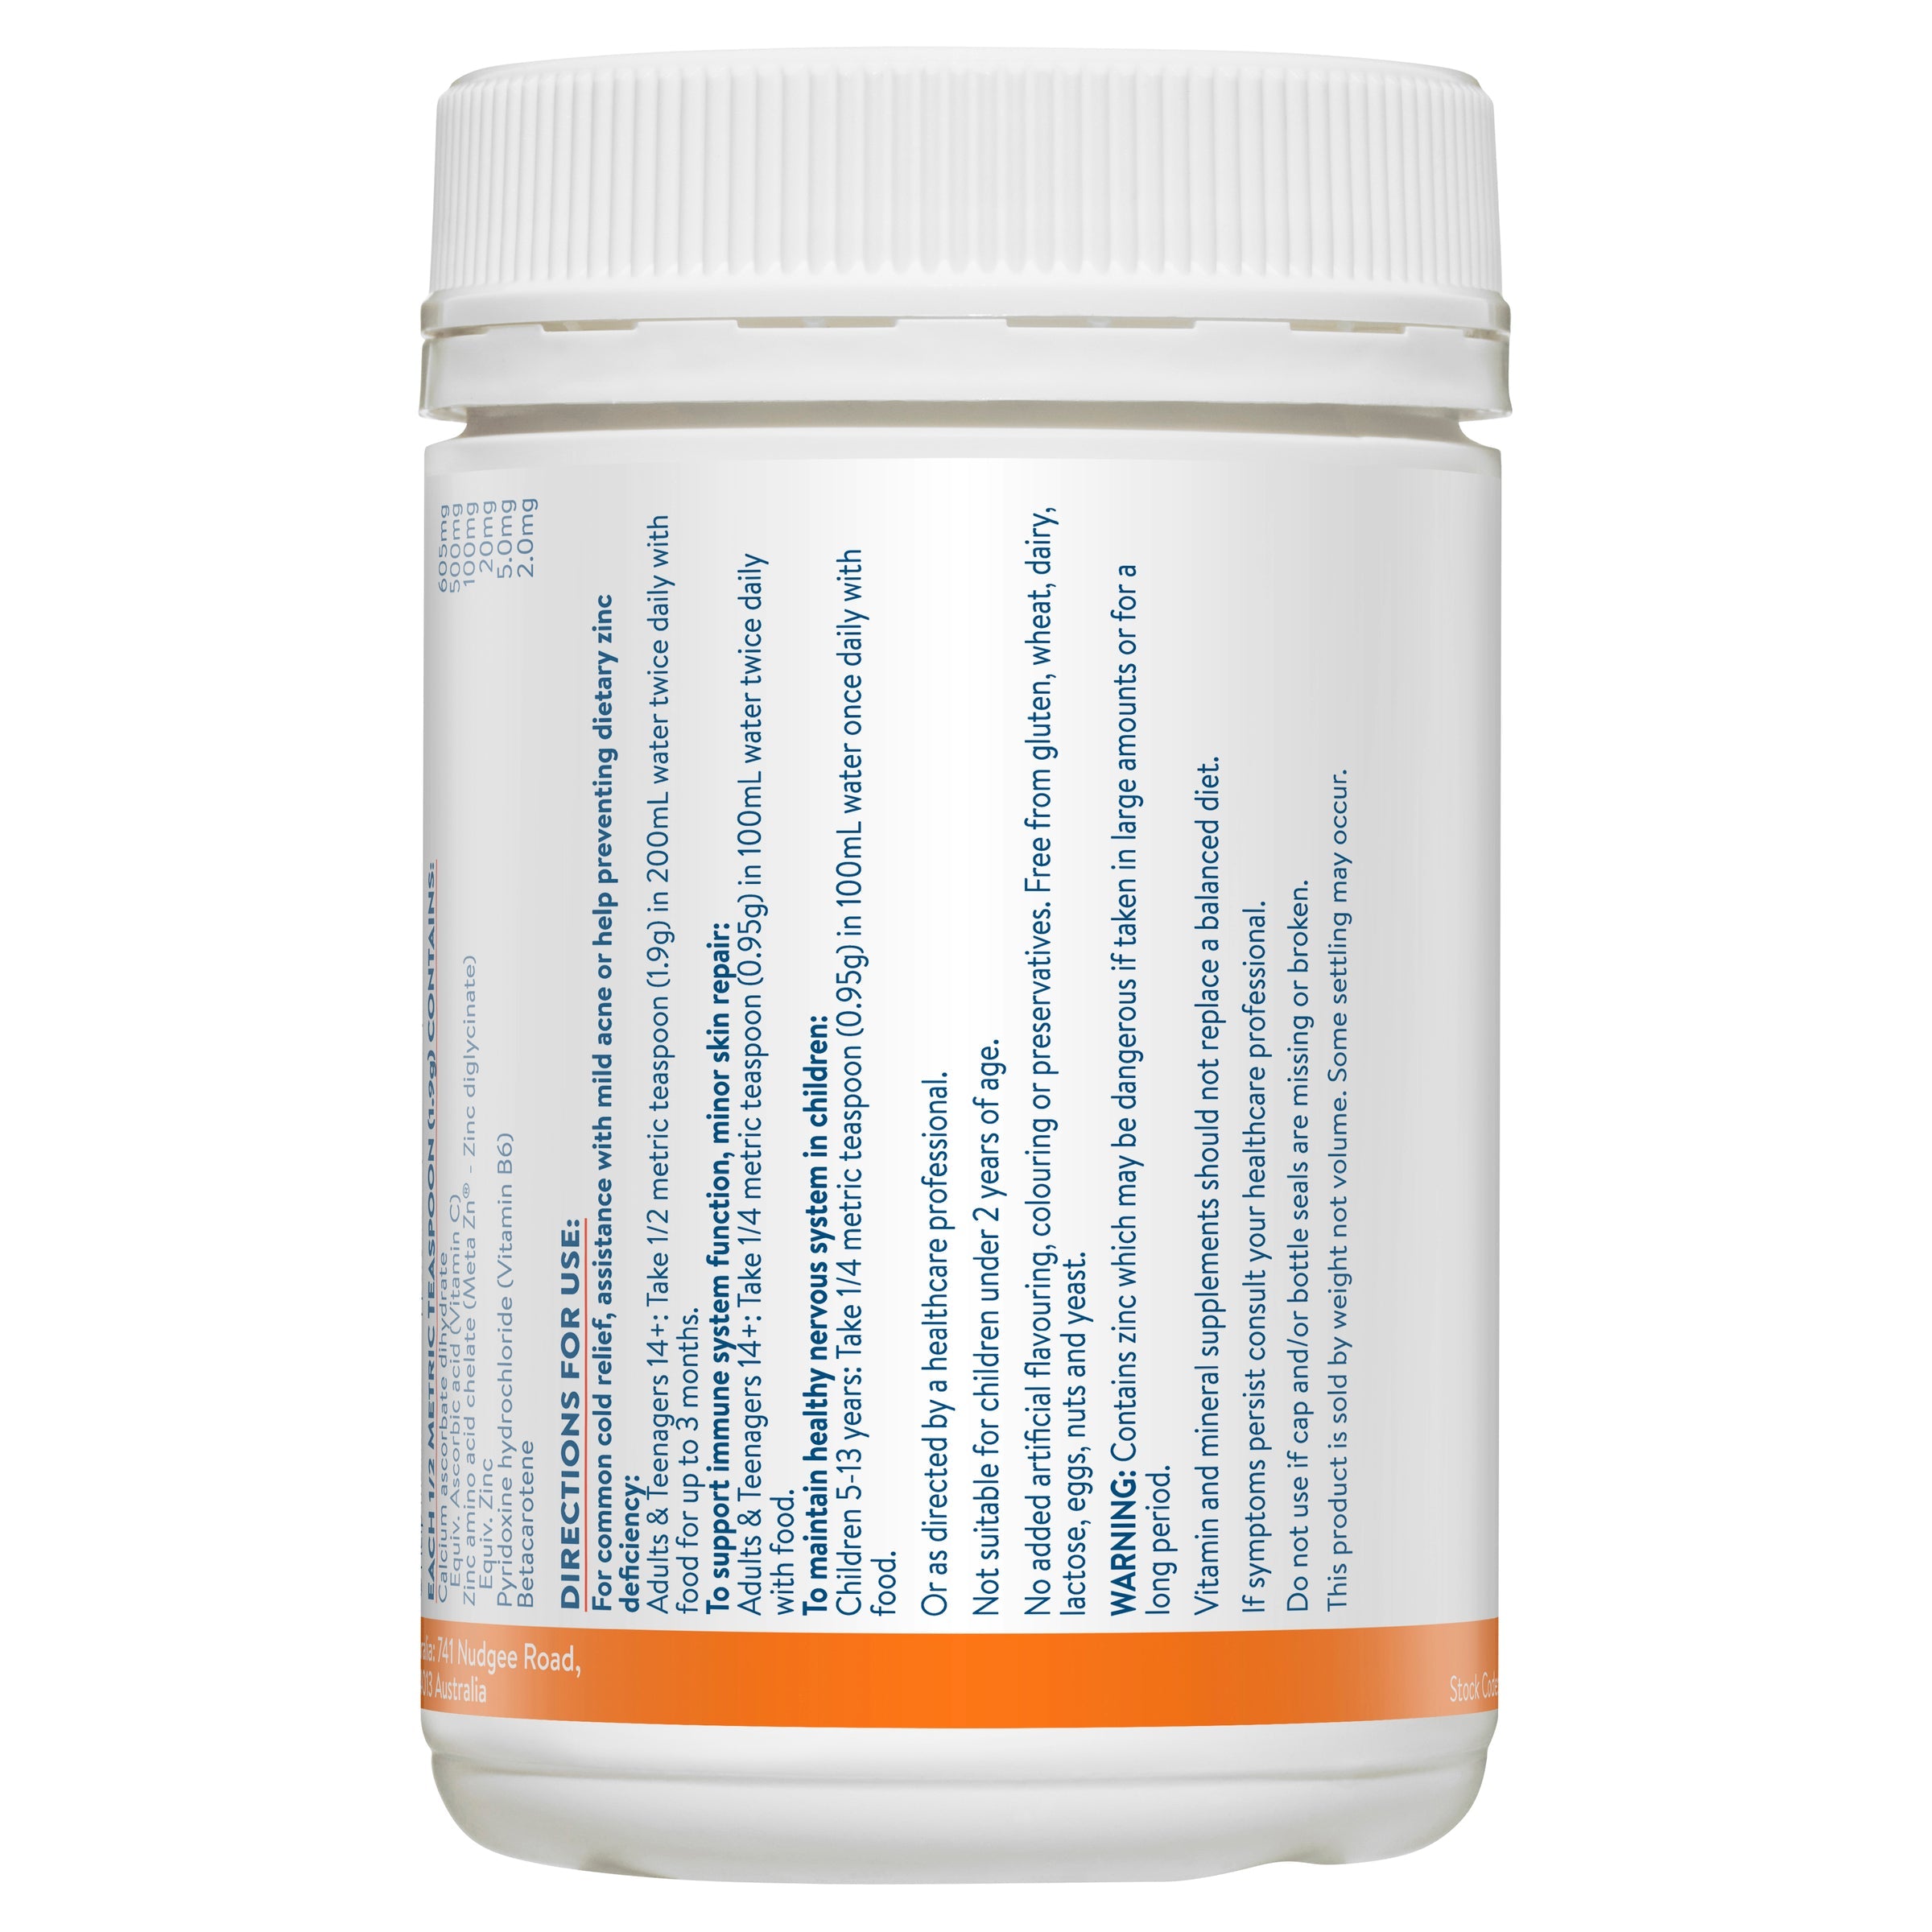 Ethical Nutrients Mega Zinc 40mg with Vitamin C Powder Orange 190g #size & flavour_orange 190g